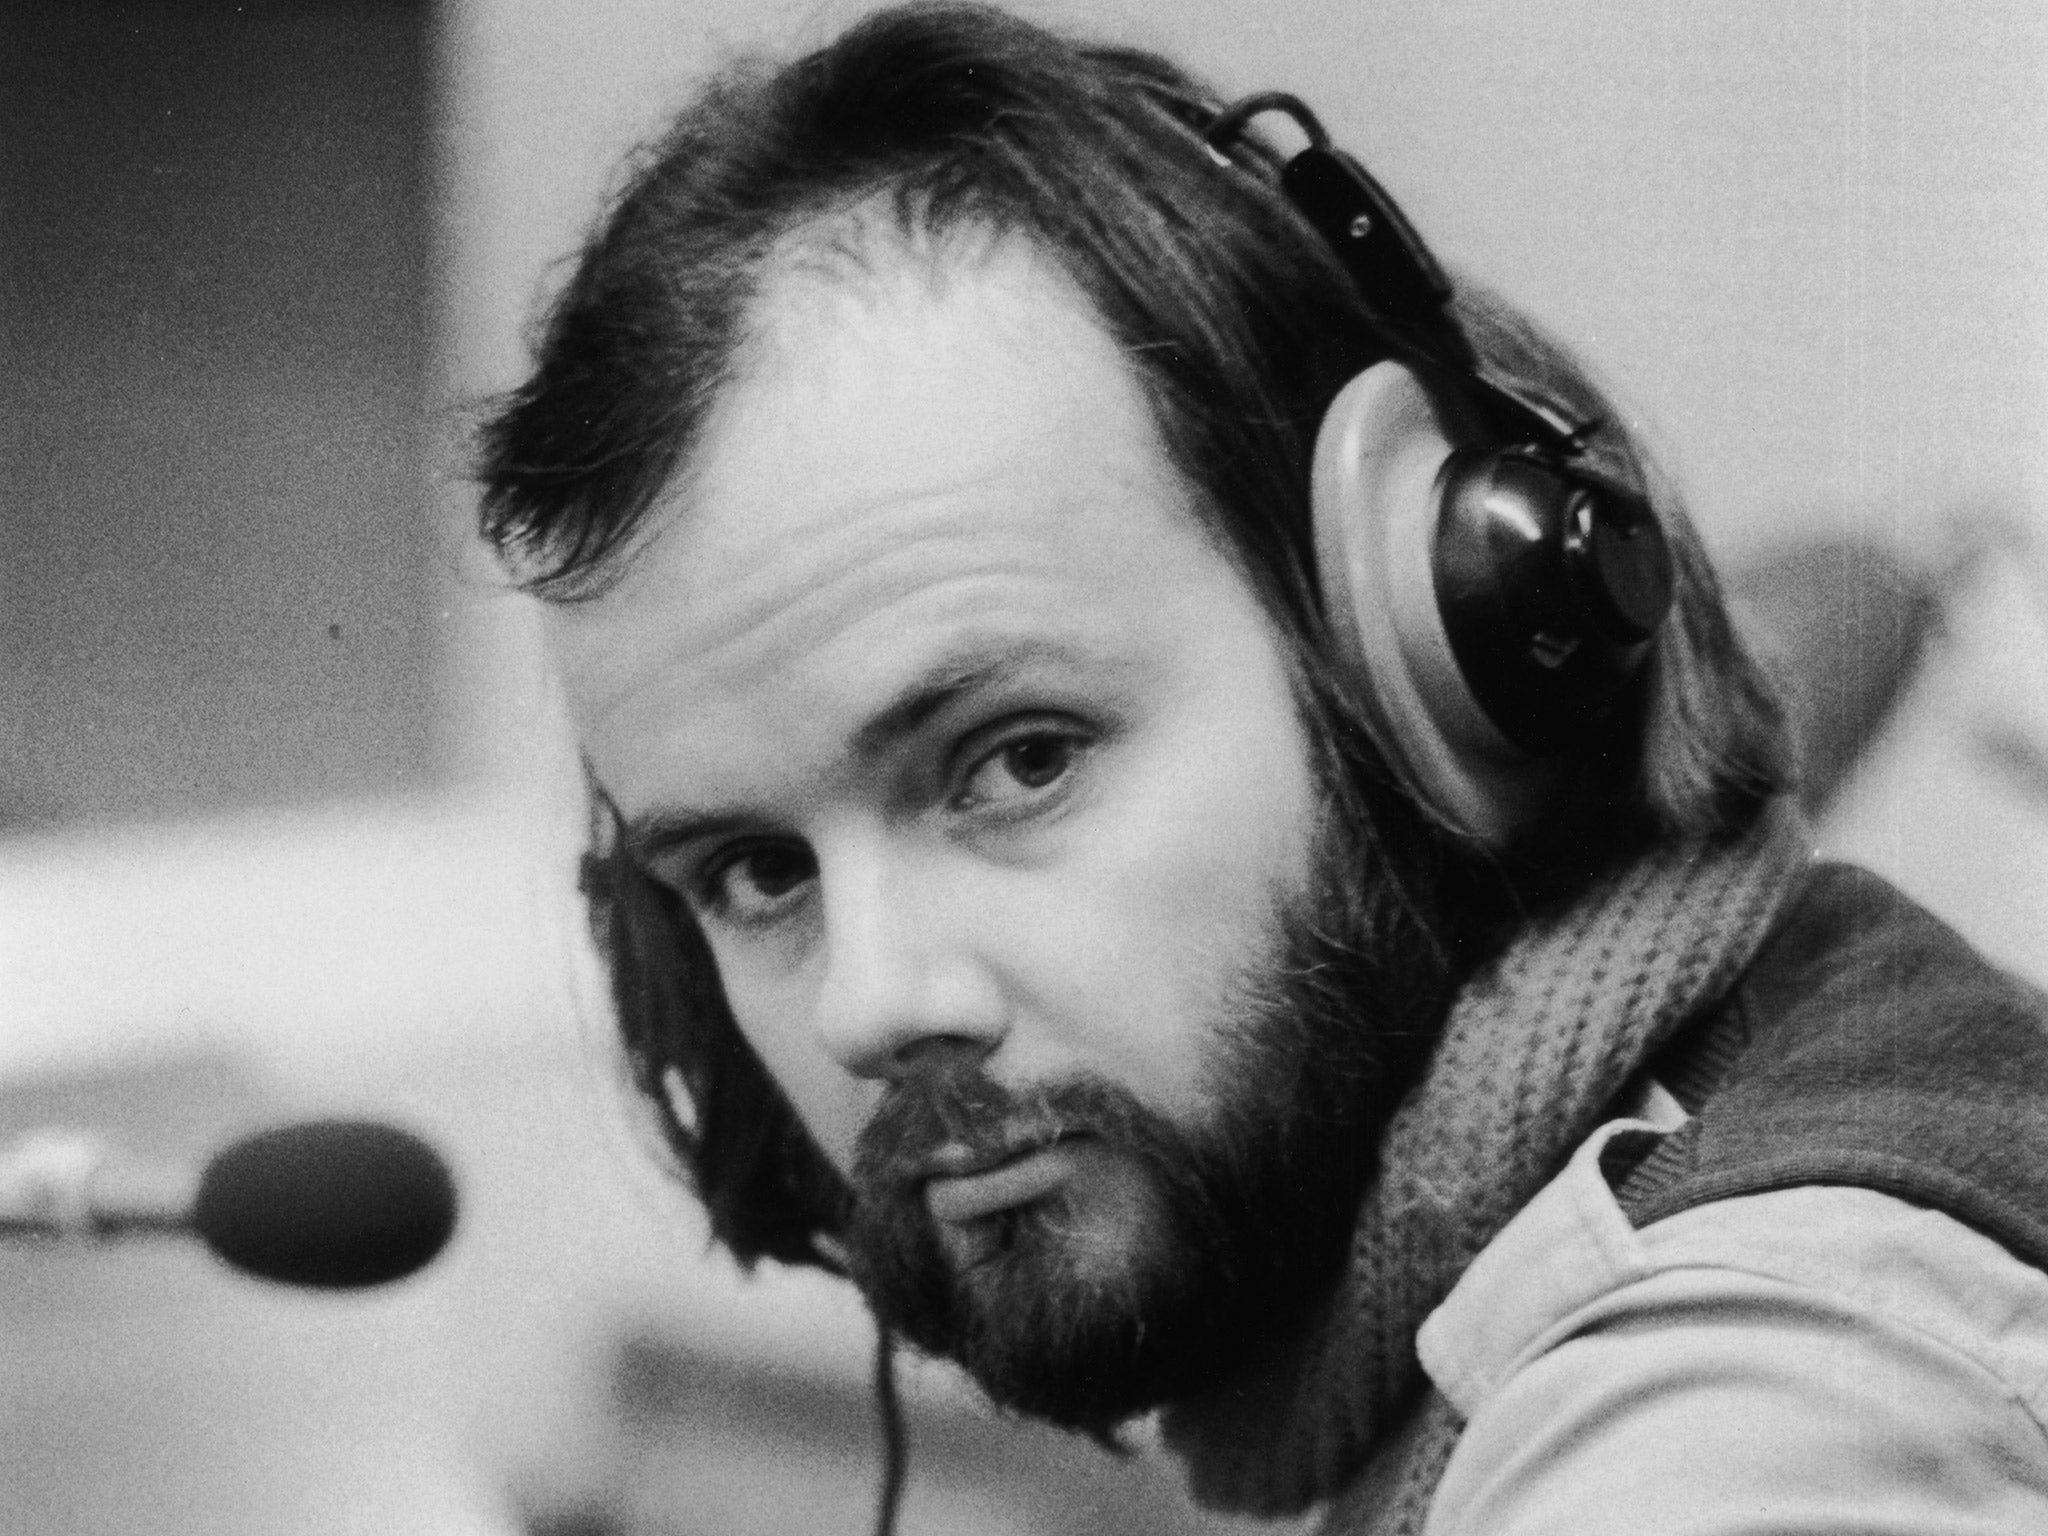 John Peel, former Radio 1 DJ and pioneering champion of alternative music, in 1972